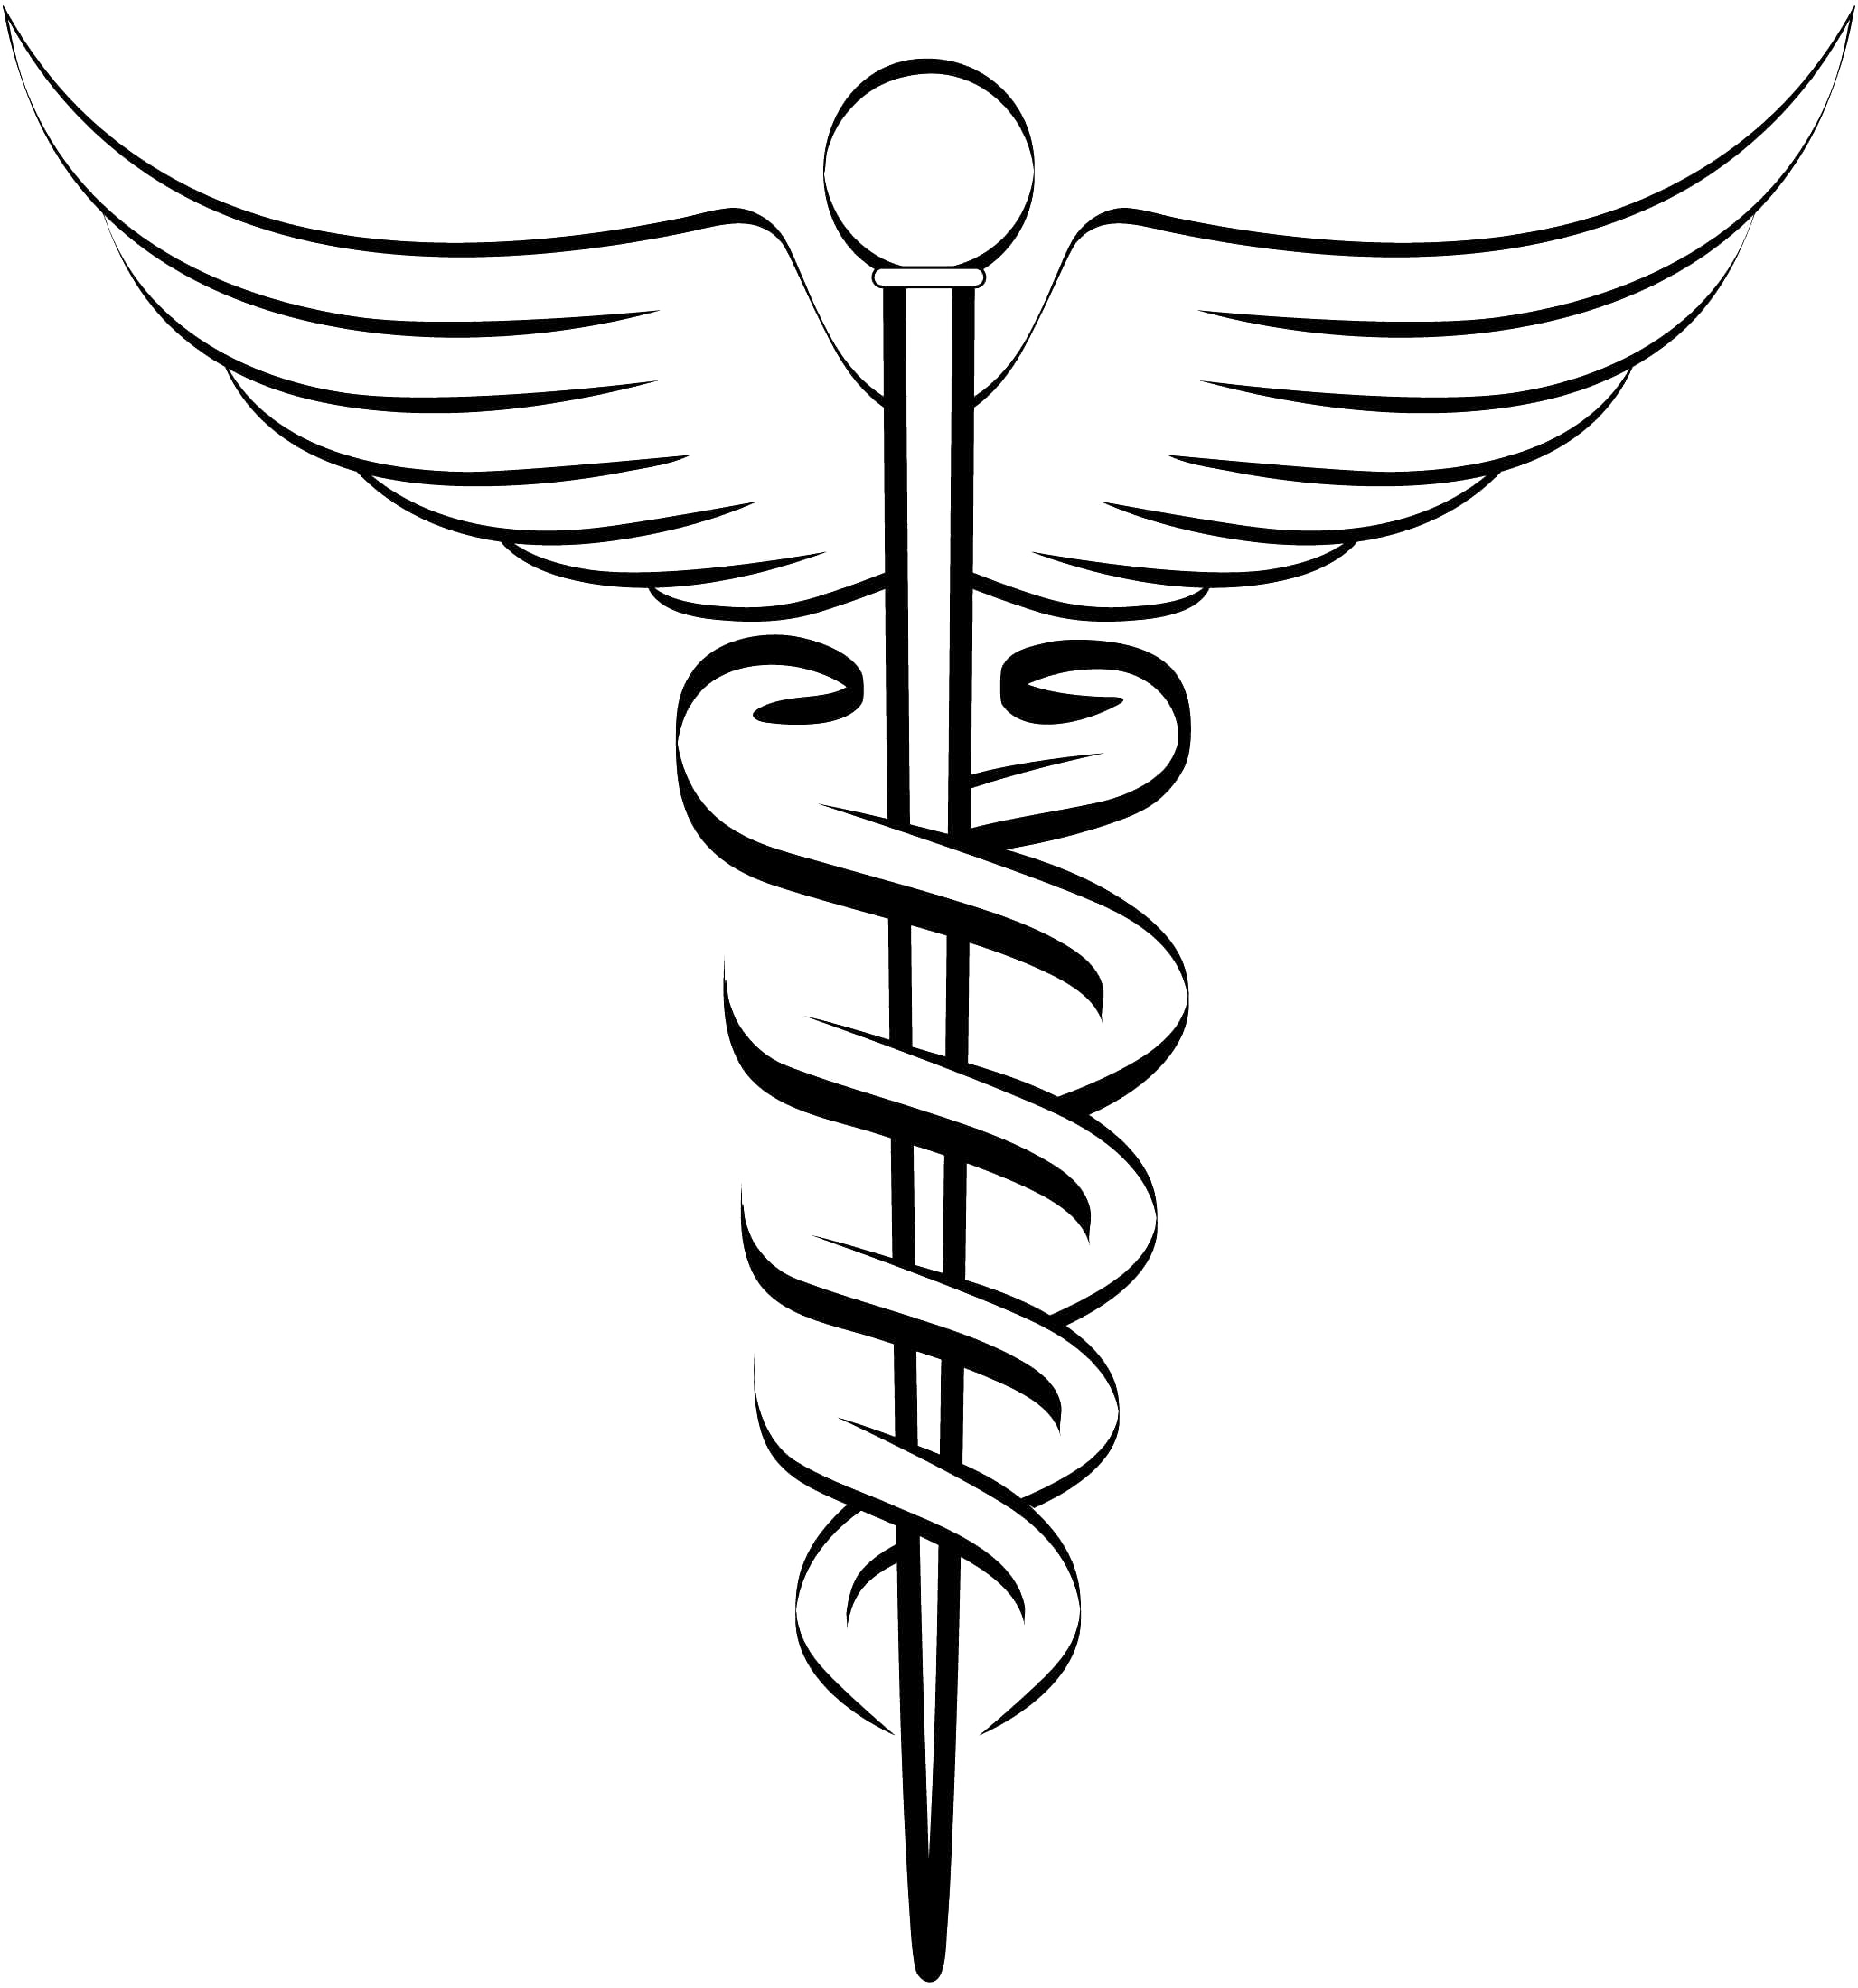 ... caduceus medical symbol (